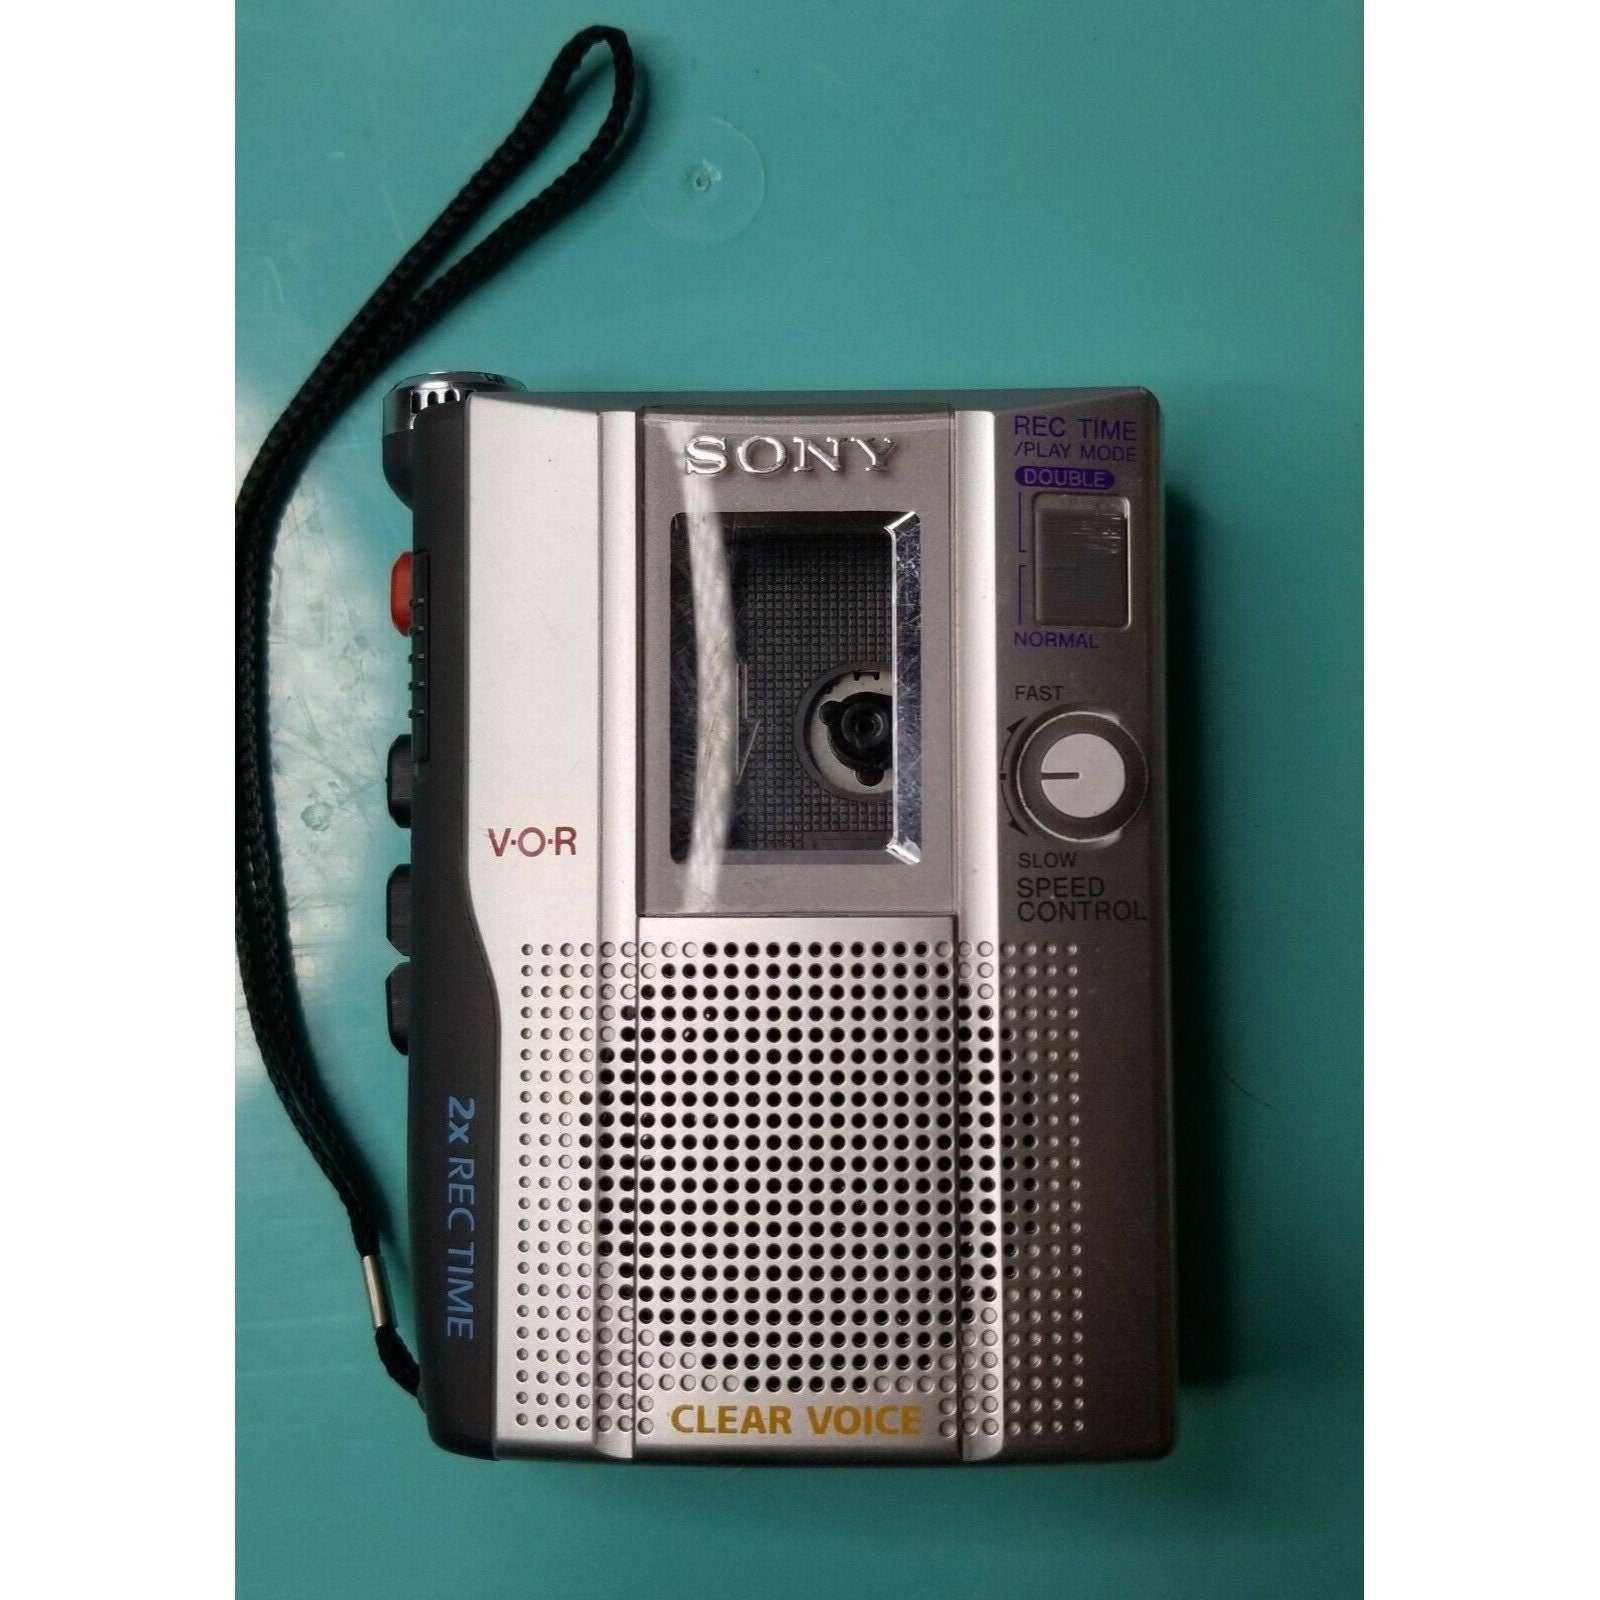 Sony Pressman TCM-220DV Handheld Cassette Voice Recorder Player